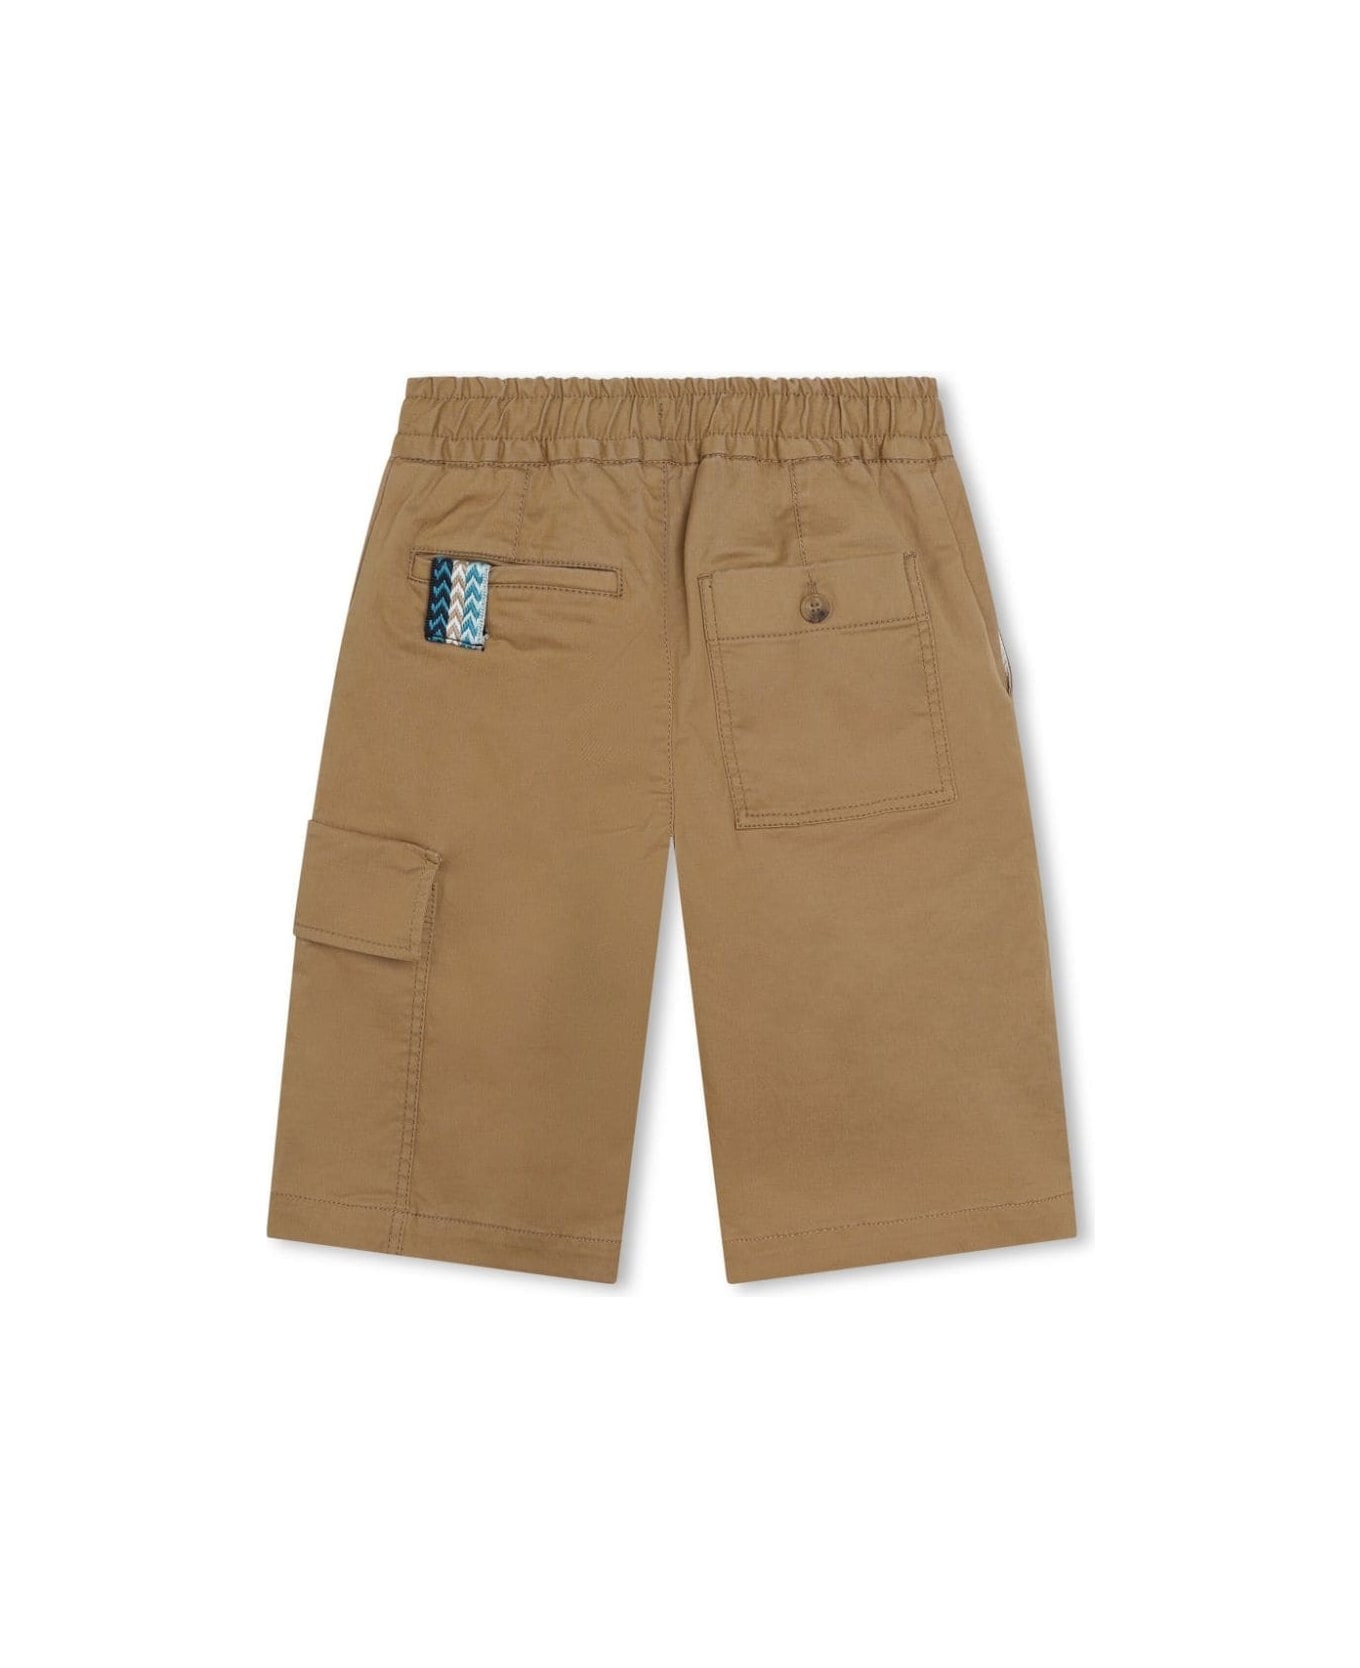 Lanvin Dark Beige Bermuda Shorts With Logo And "curb" Motif - Brown ボトムス